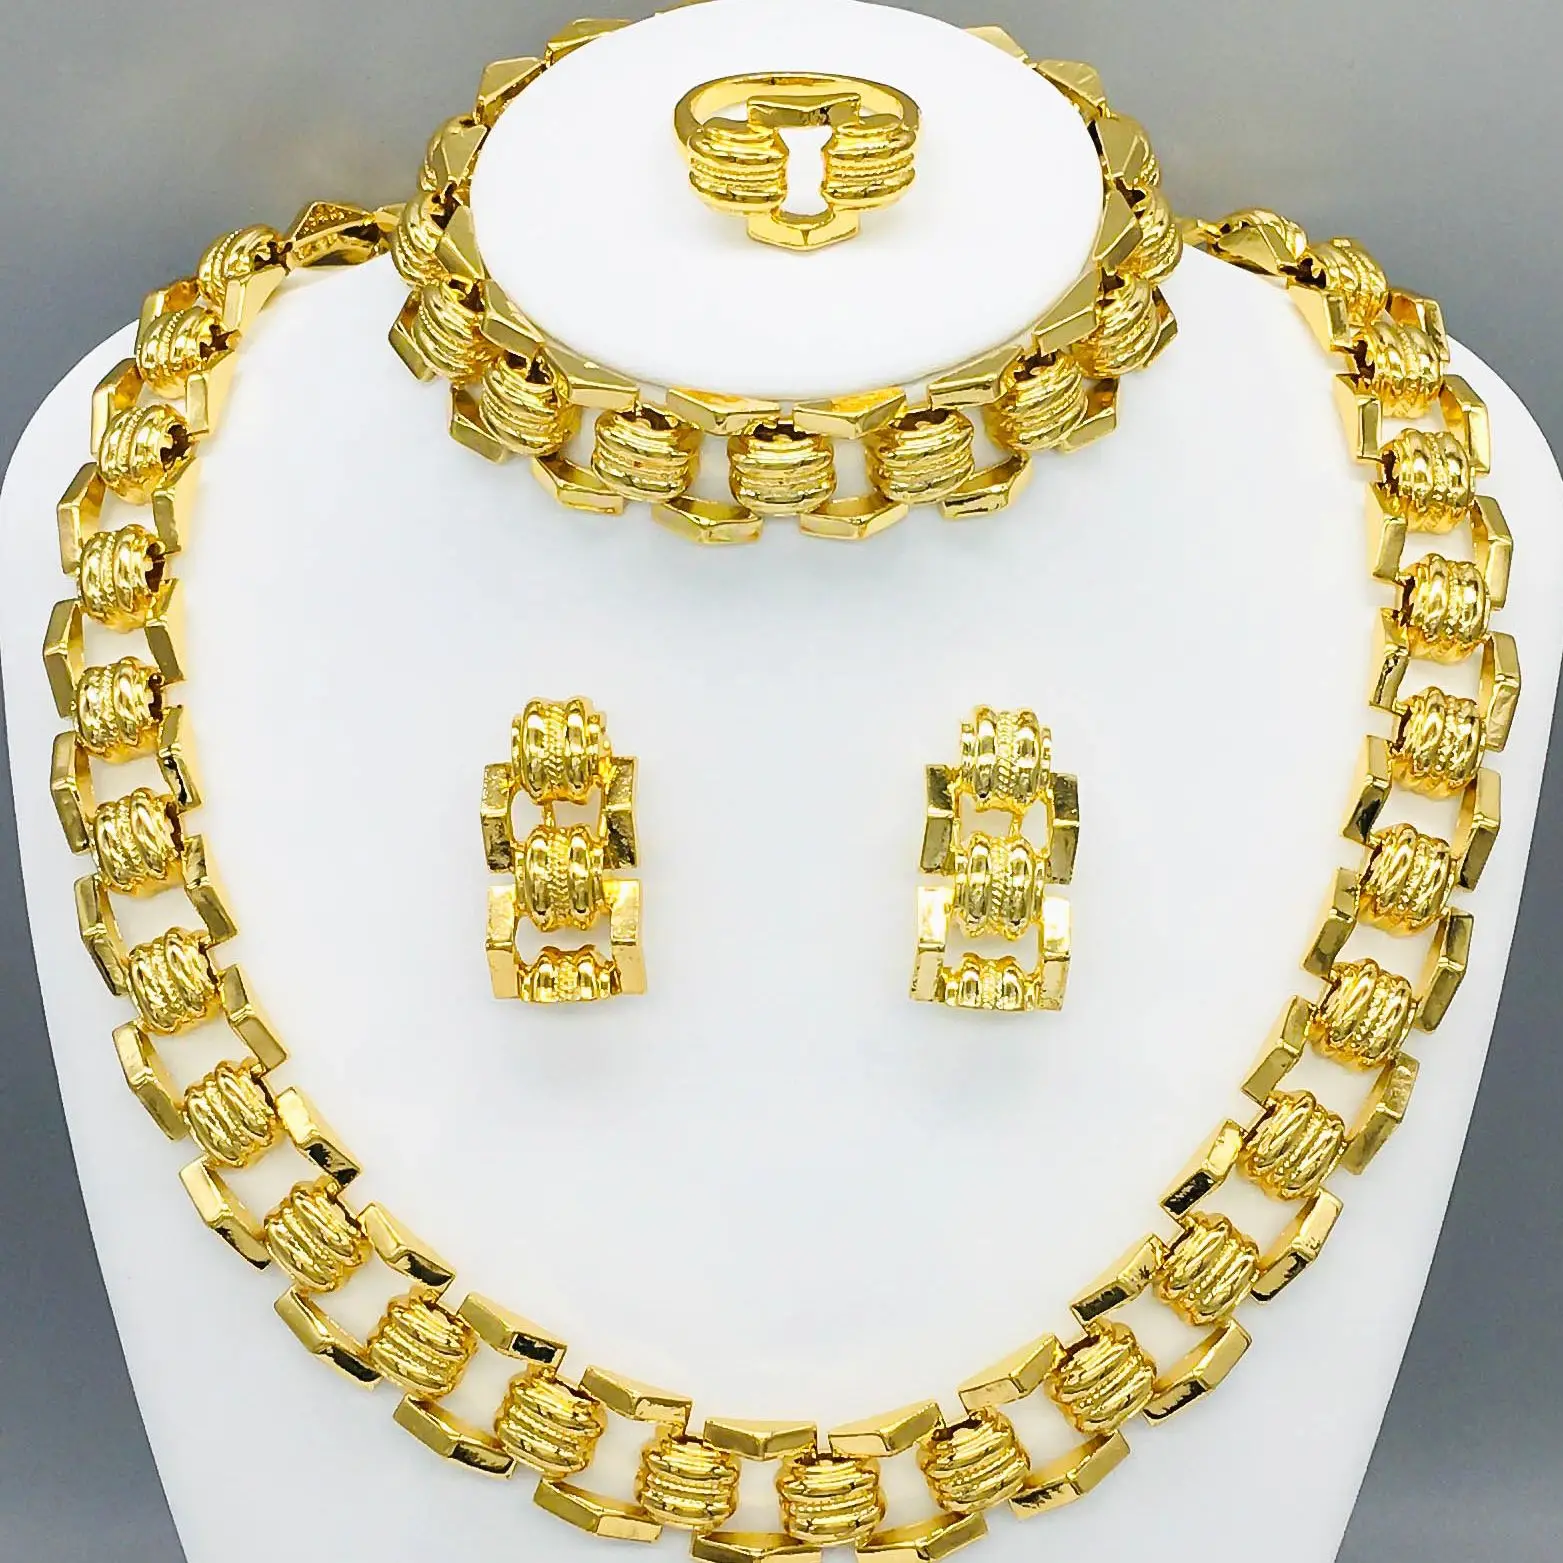 New Design Dubai Gold Jewelry Sets For Women Fashion Classic Necklace Earrings Bracelet Set Bridal Jewelry Sets Wedding Gift